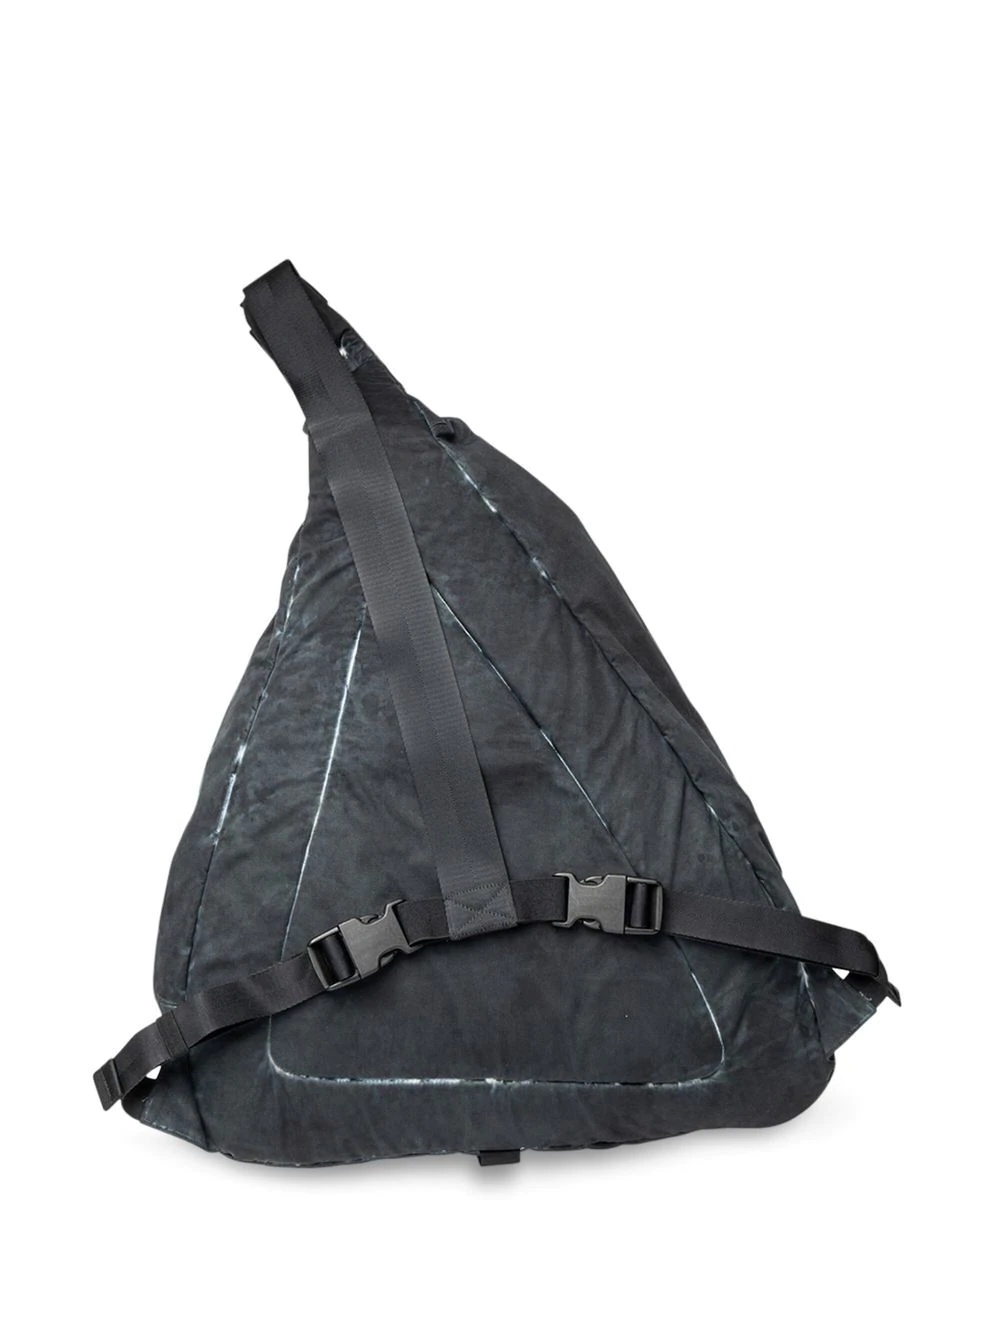 Supreme x Stone Island printed Camo shoulder bag | REVERSIBLE